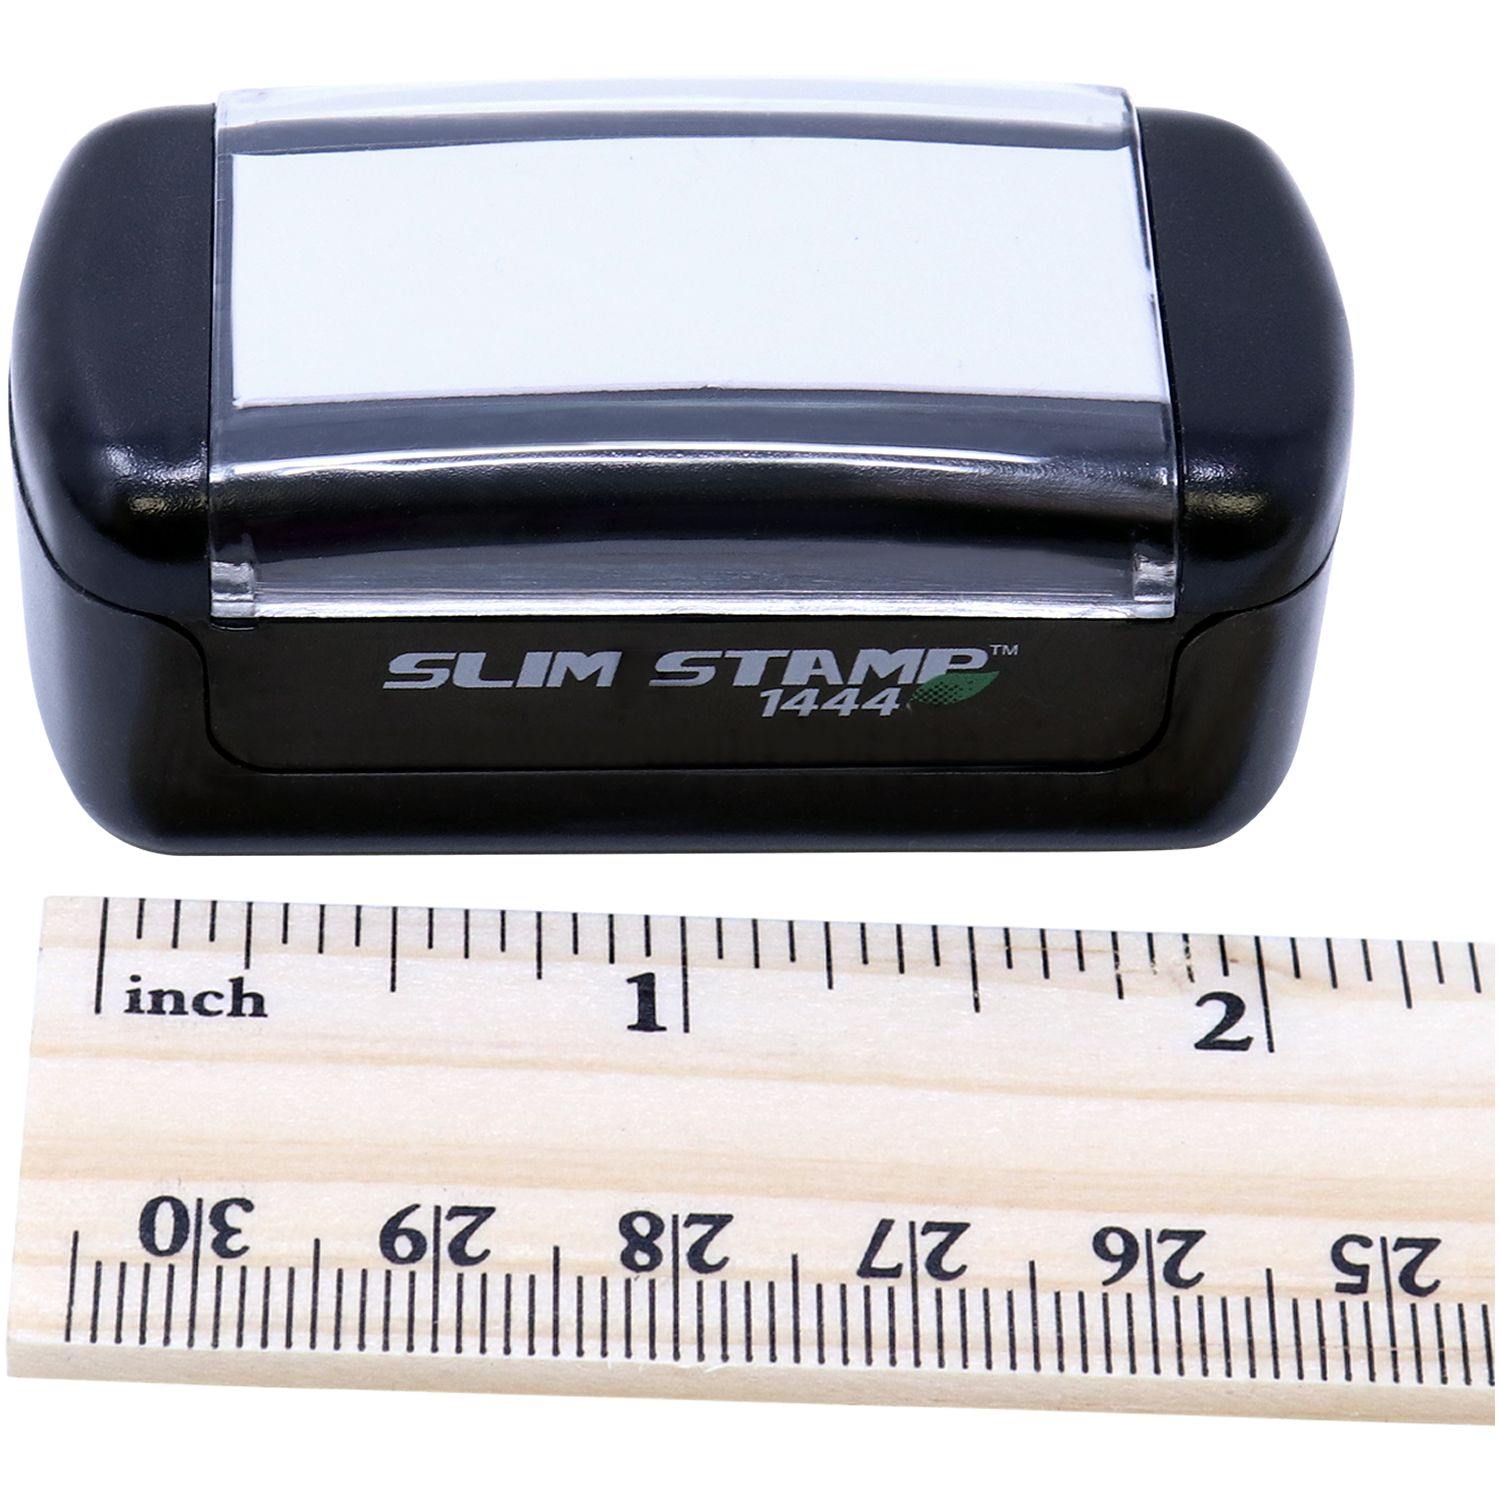 Measurement Slim Pre-Inked Global Air Letter Post Stamp with Ruler